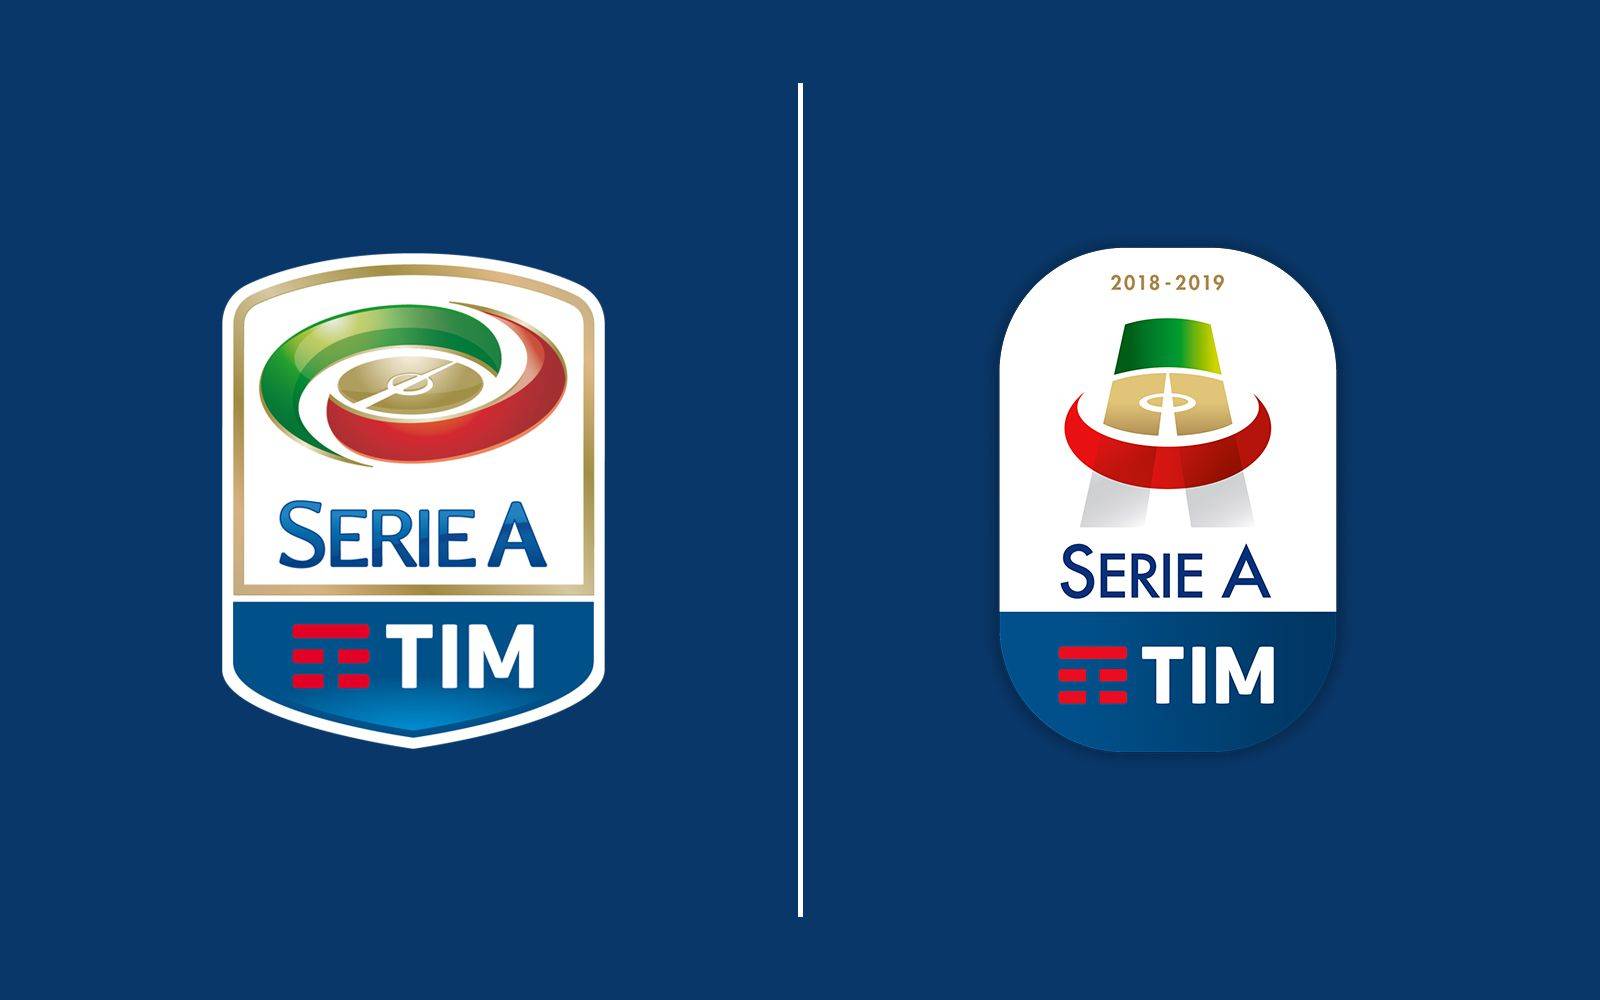 Banyak Kritikan untuk Logo Baru Serie A | Football Tribe Indonesia